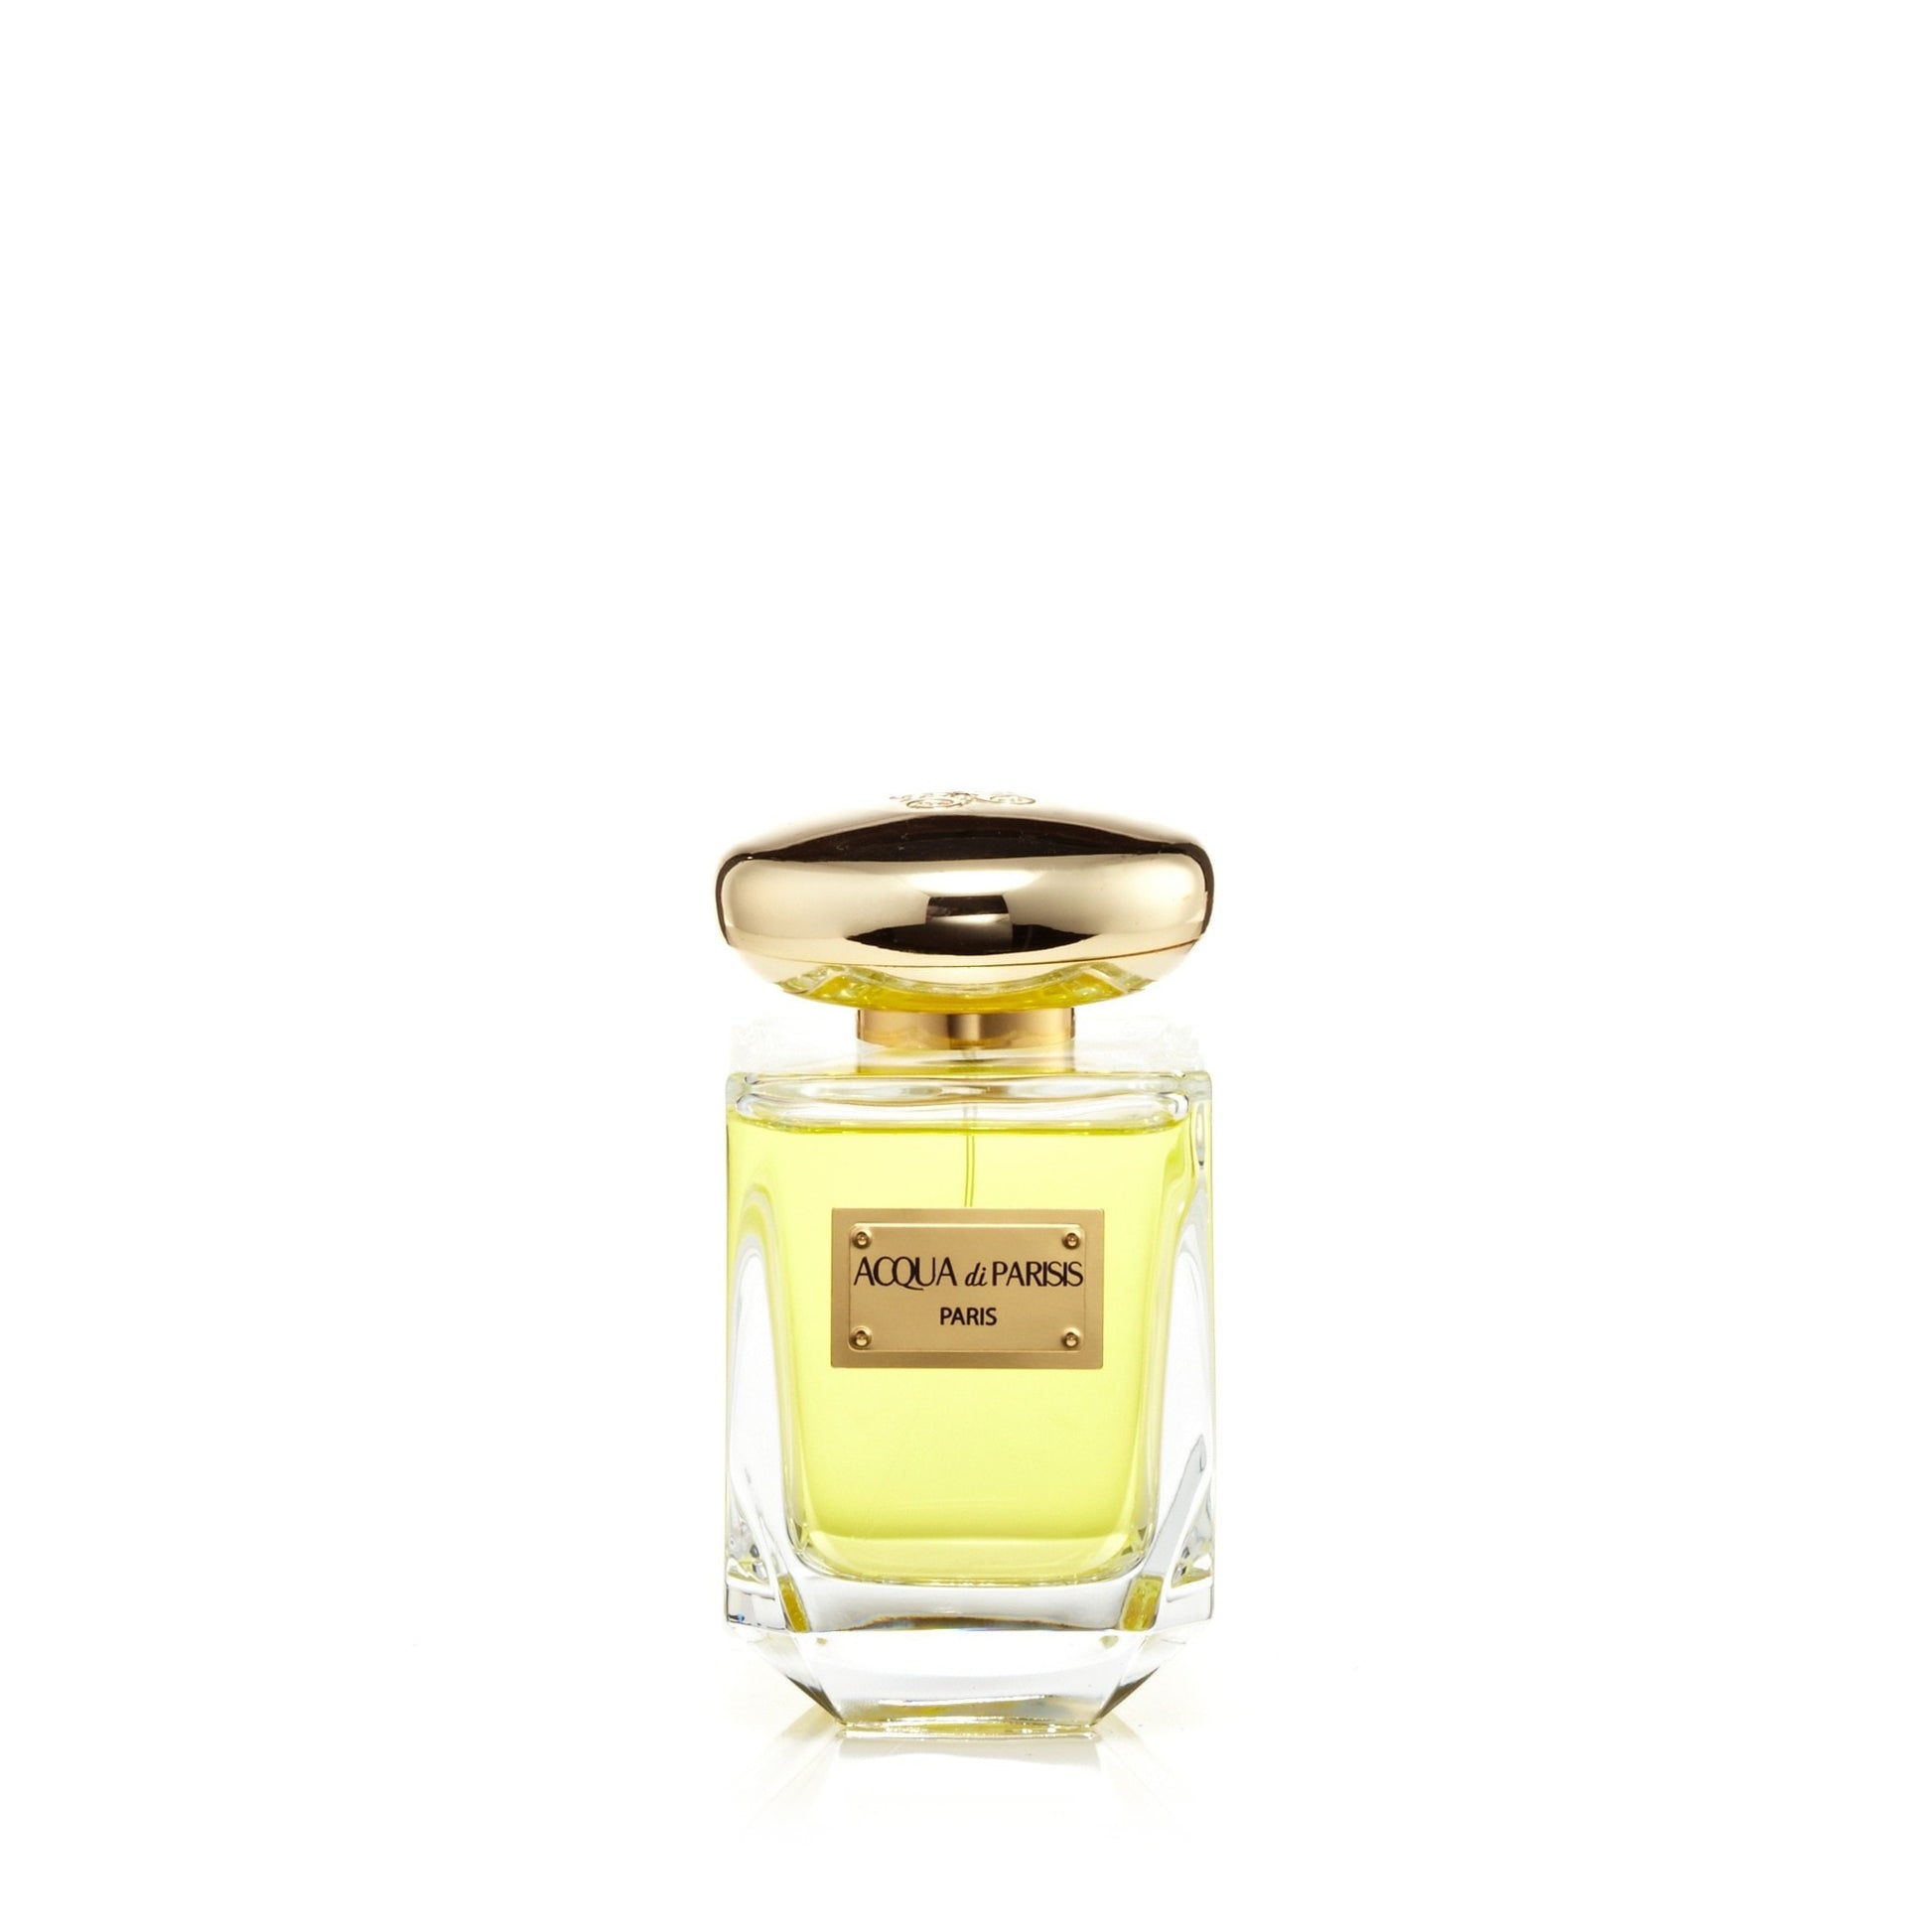 Acqua Di Parisis Porto Nero Eau de Parfum Womens Spray 3.4 oz. Click to open in modal